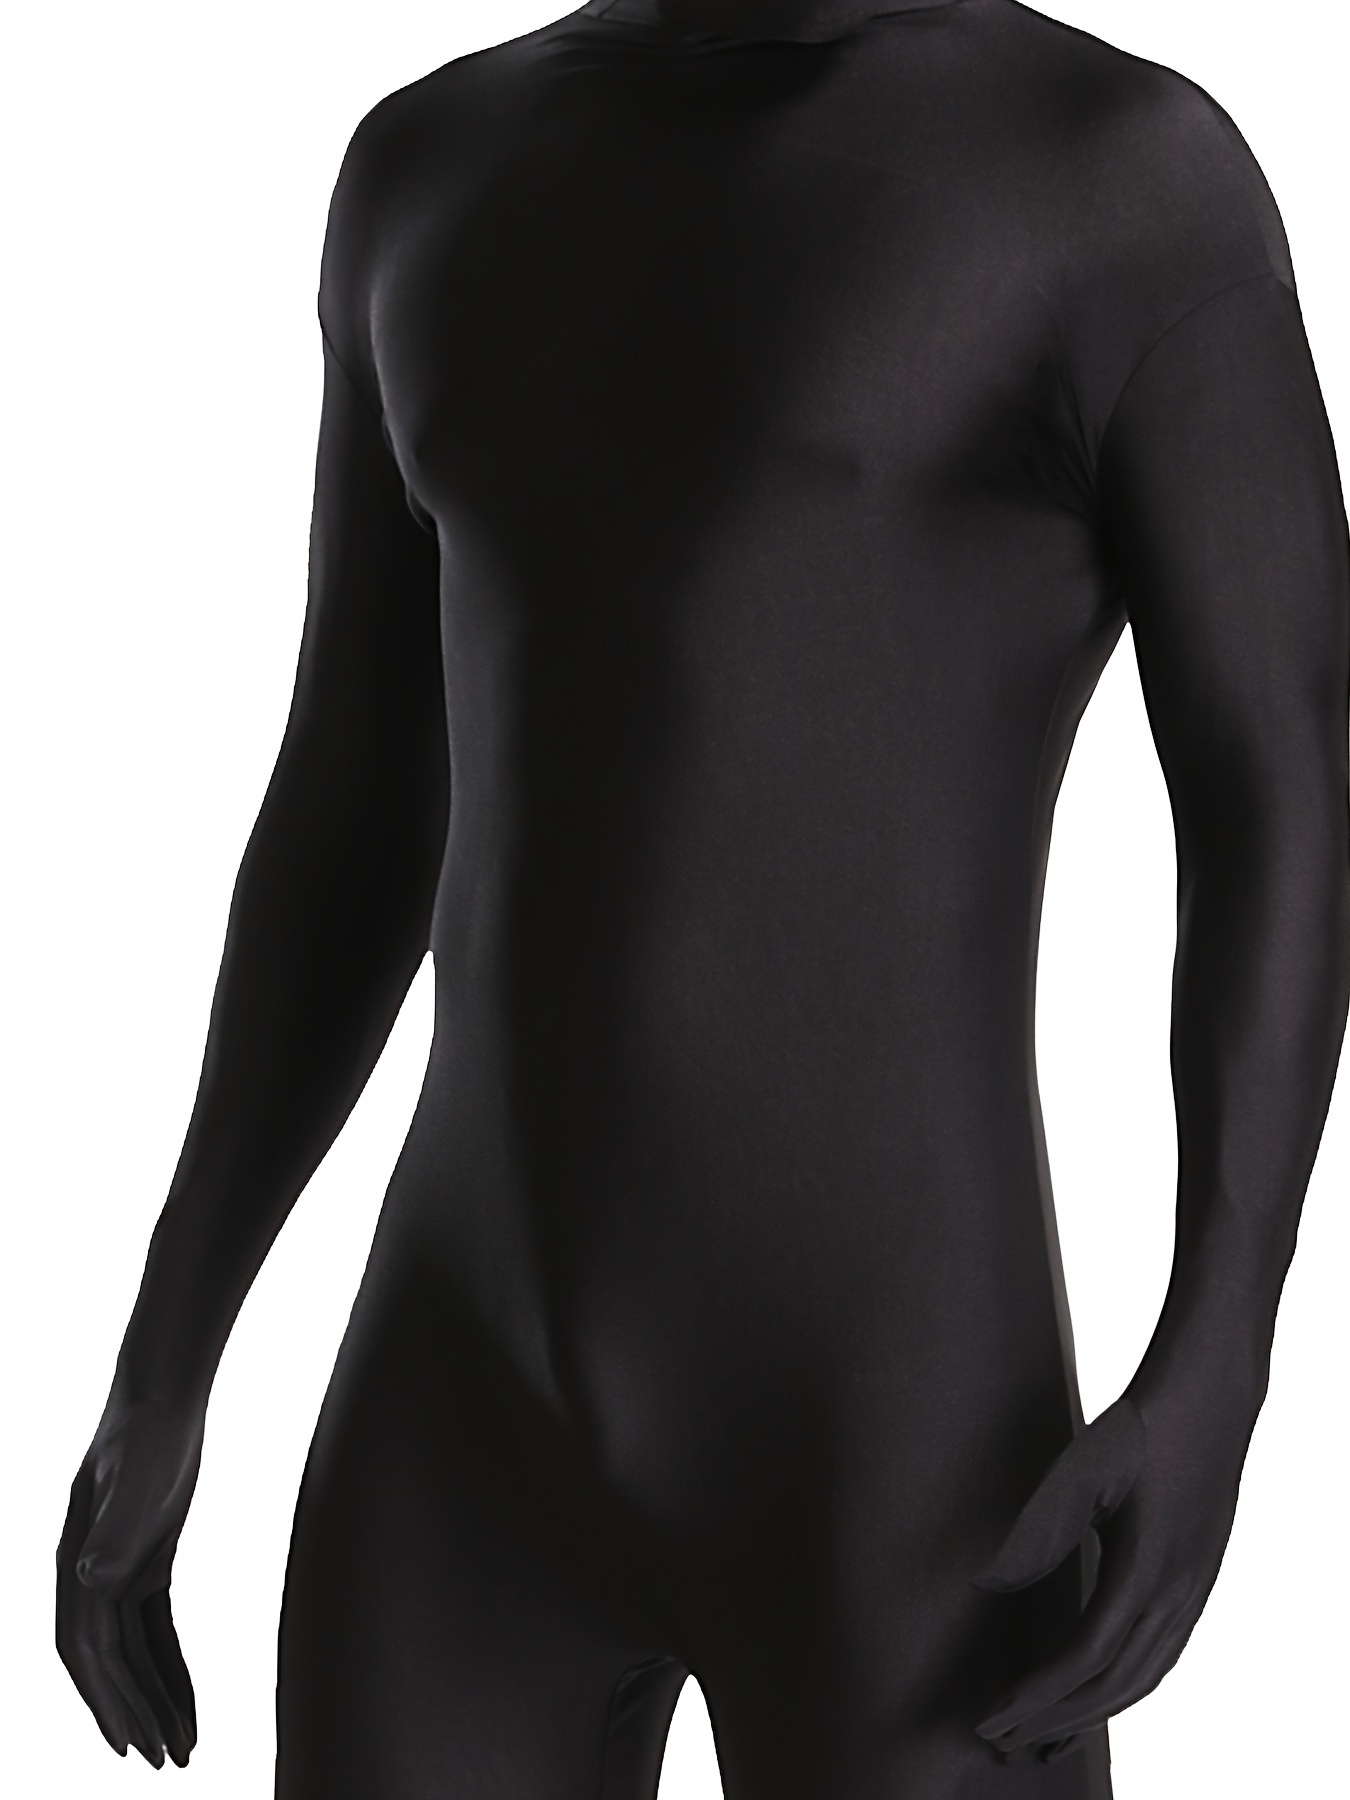 Full Body Suit Spandex Unisex Zentai Suit, Today's Best Daily Deals